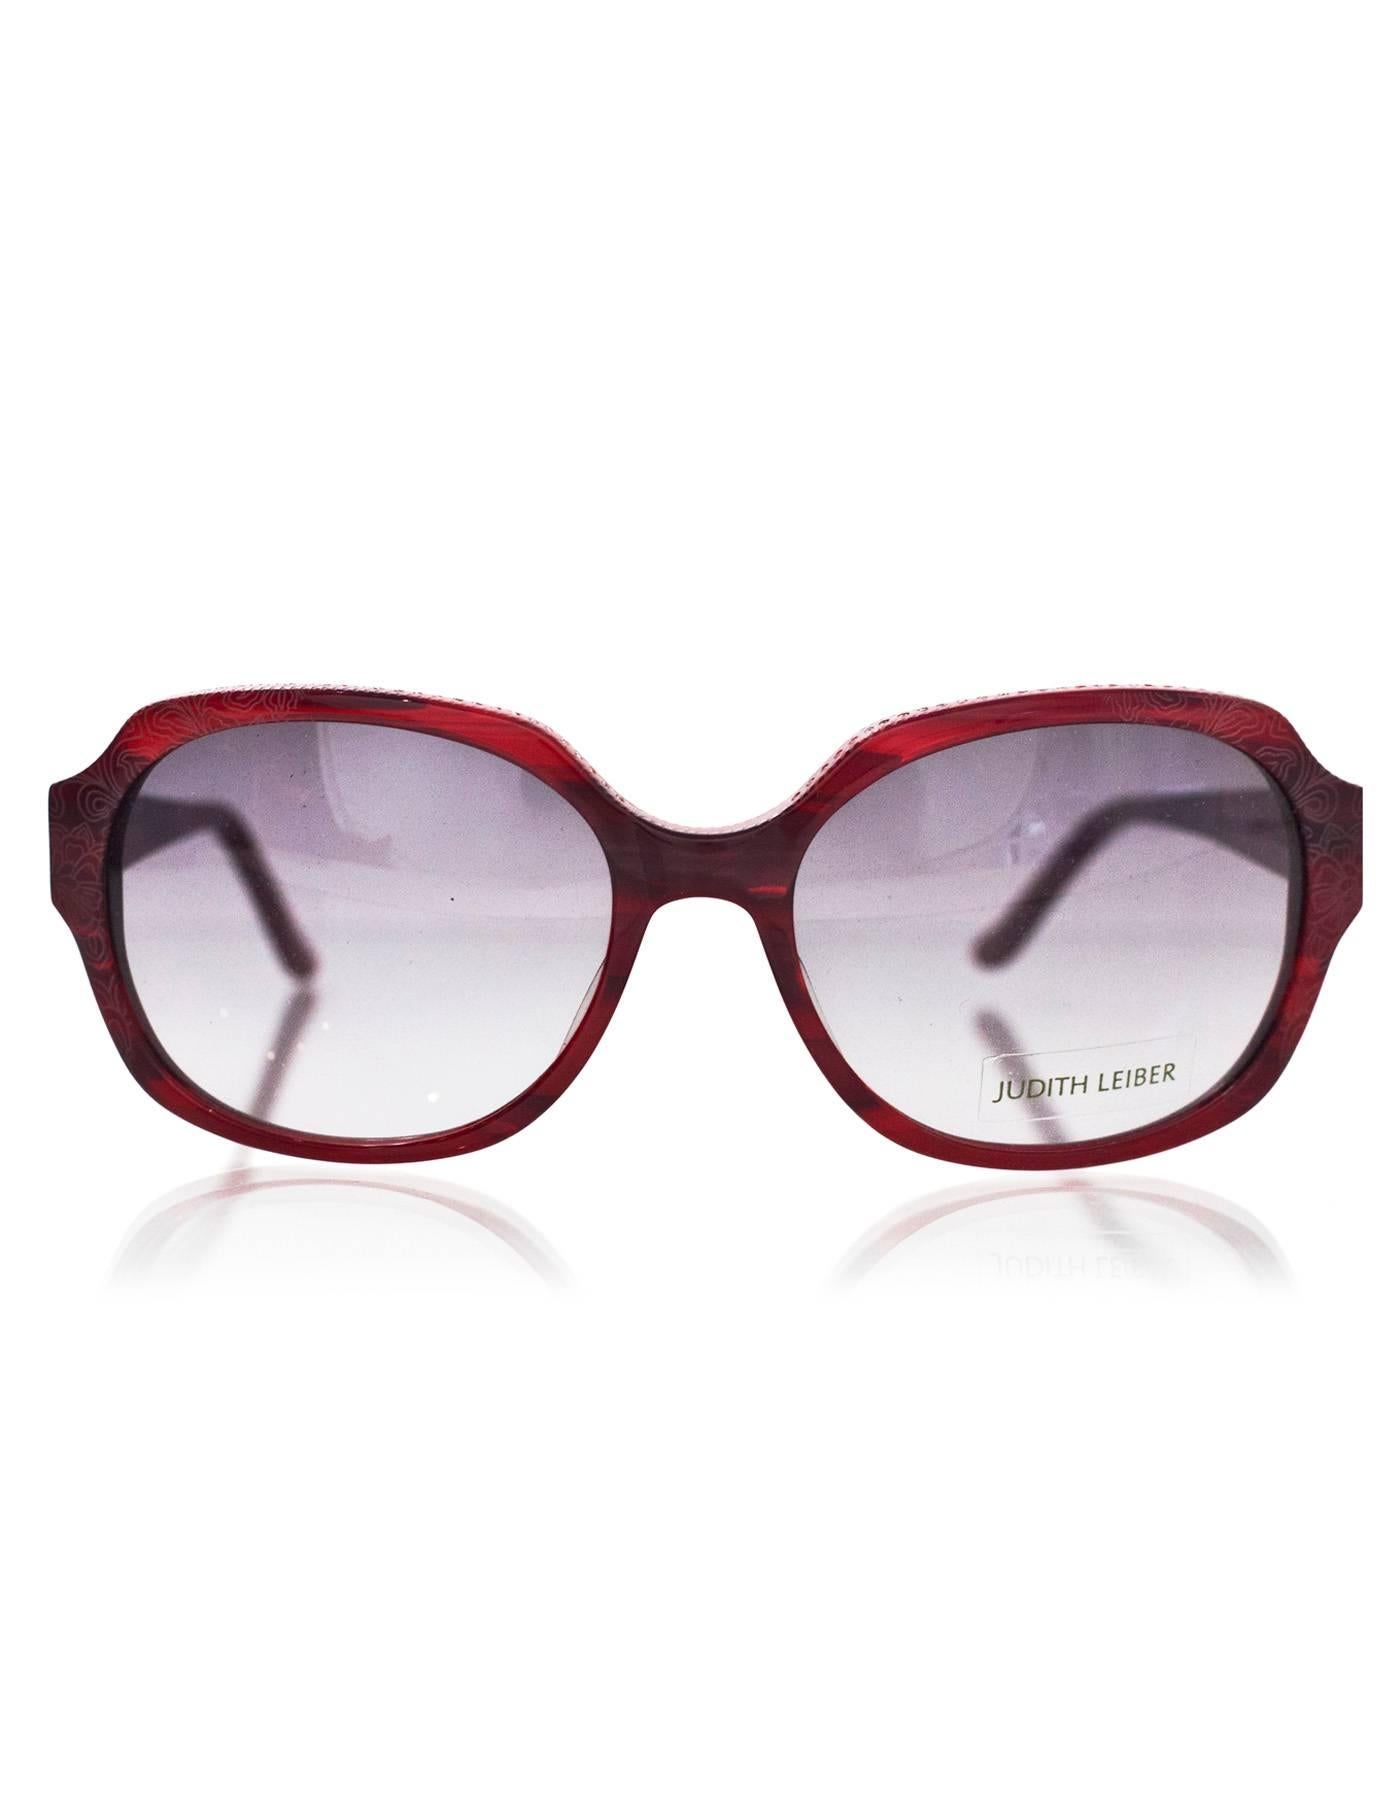 Black Judith Leiber JL1169 Red Swarovski Crystal Sunglasses w/ Box & Case